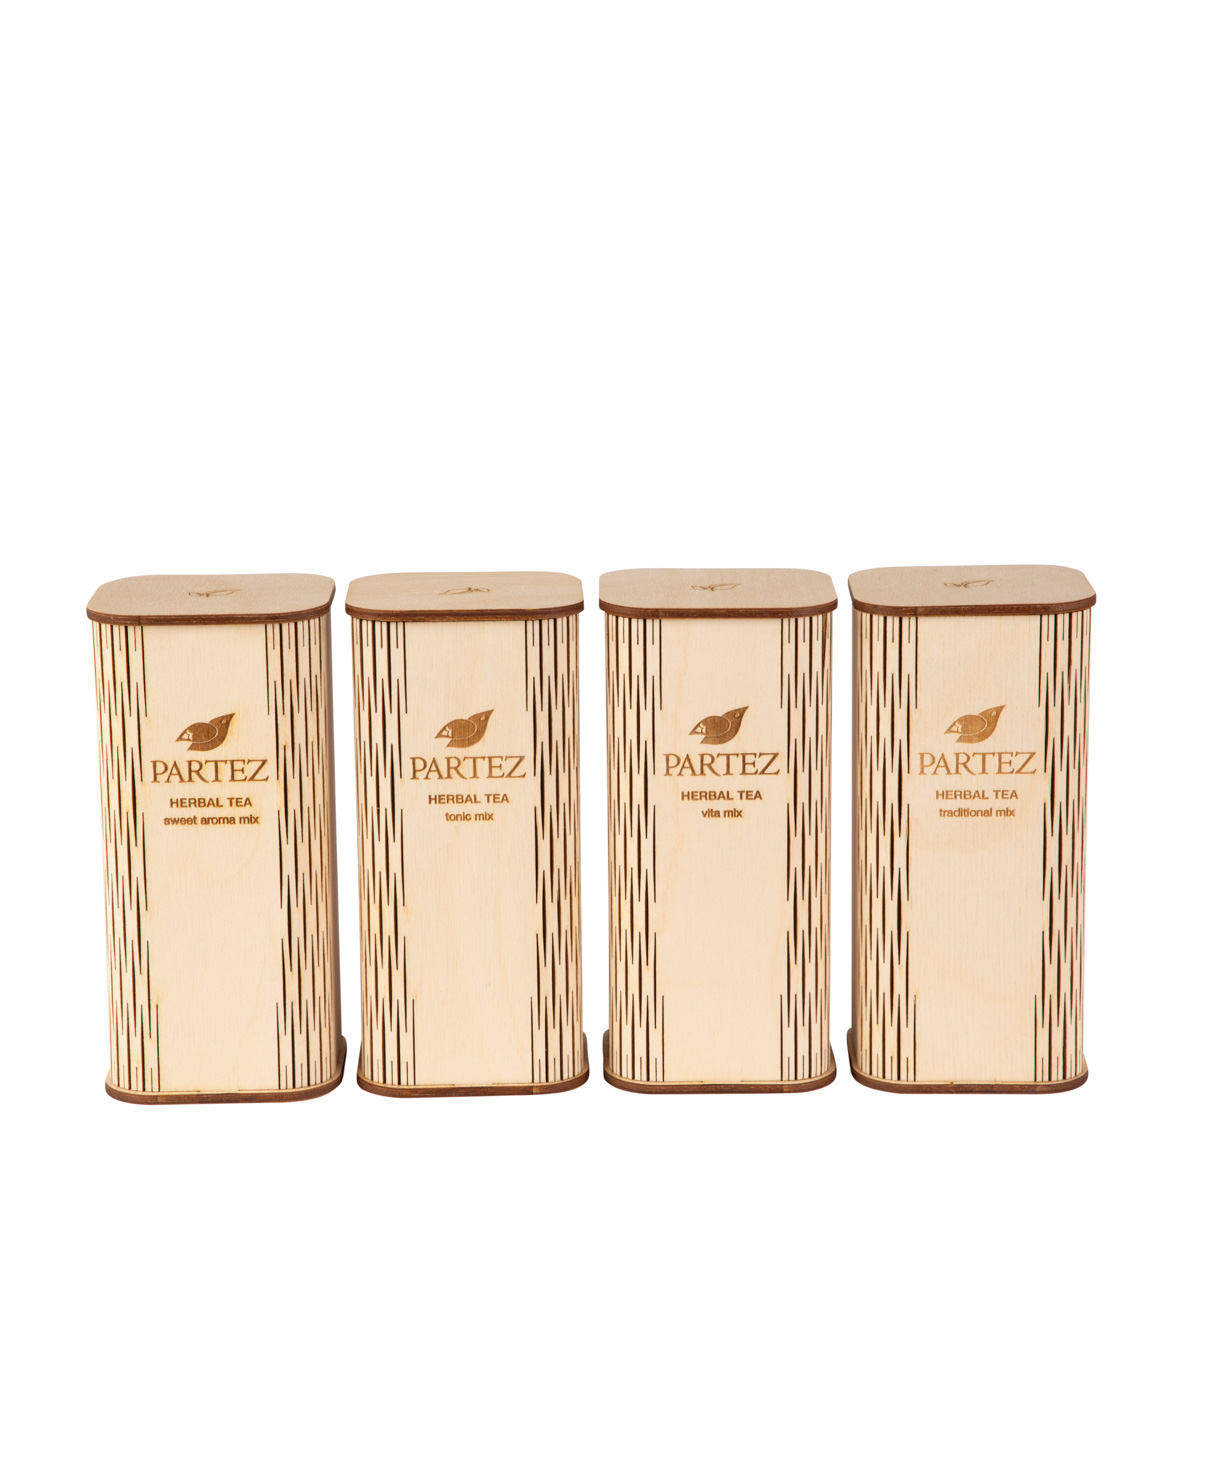 Tea `Partez` in a wooden souvenir box, traditional mix